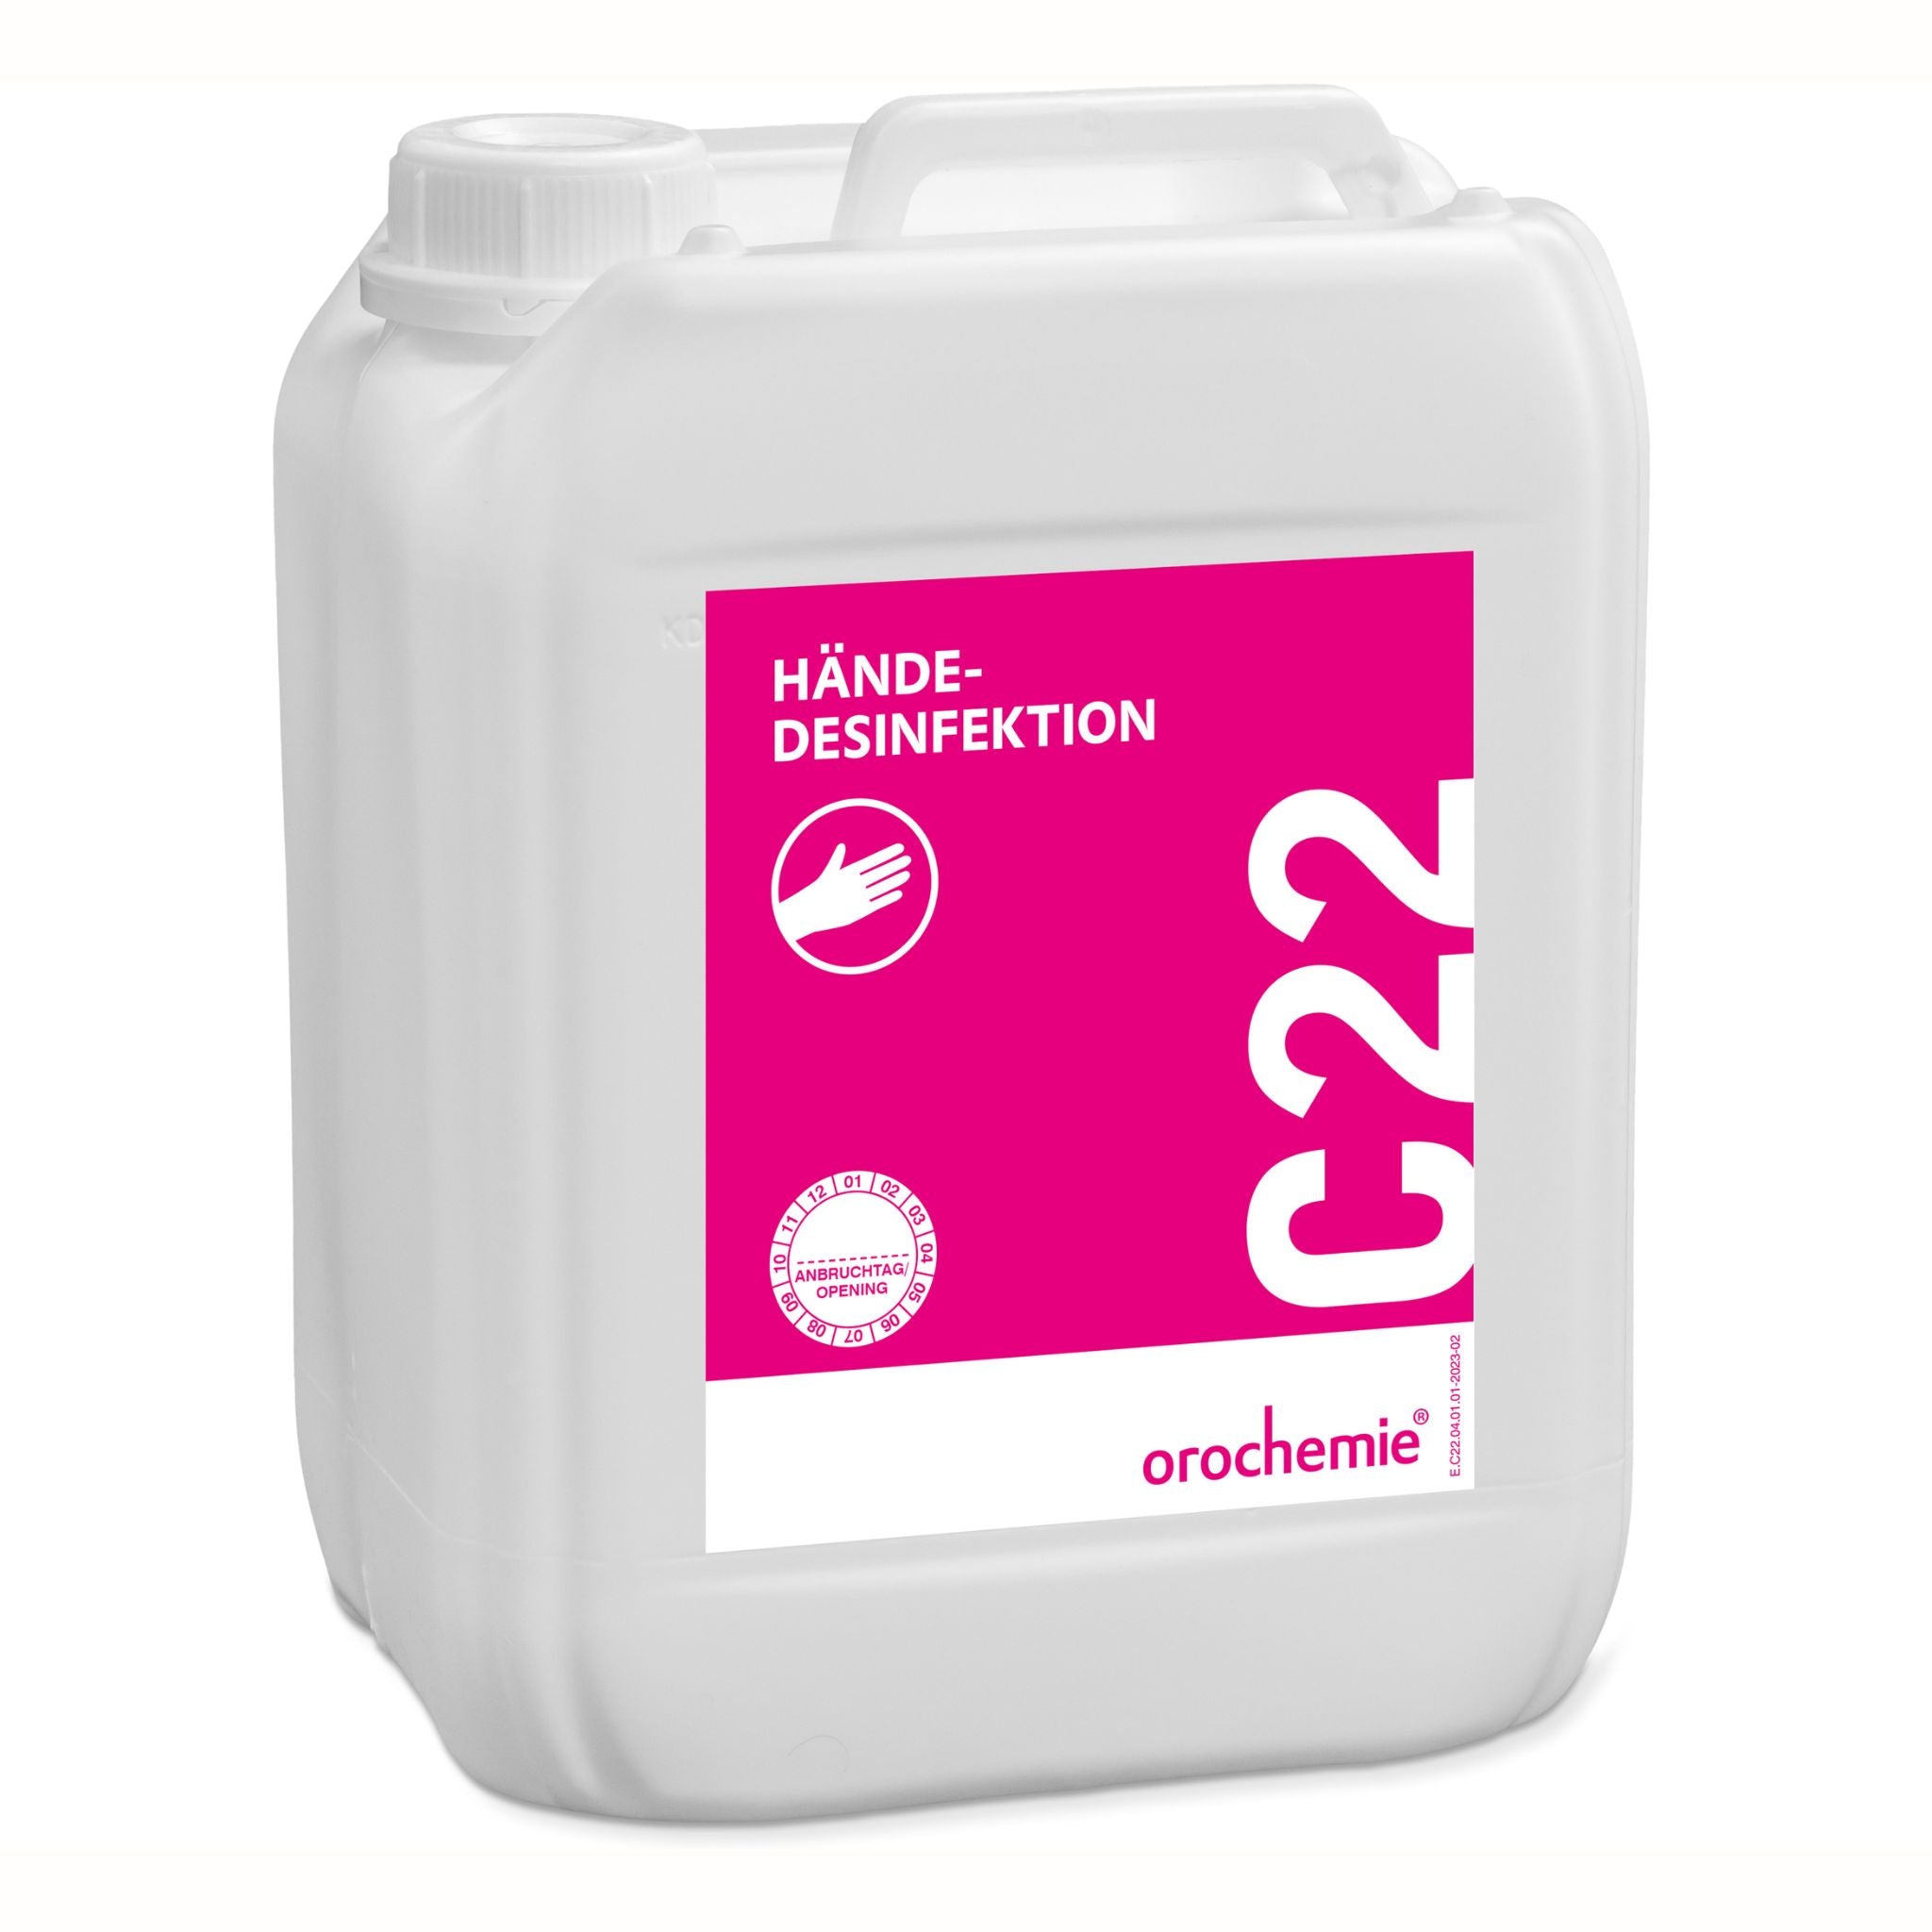 Orochemie C22 hand disinfection